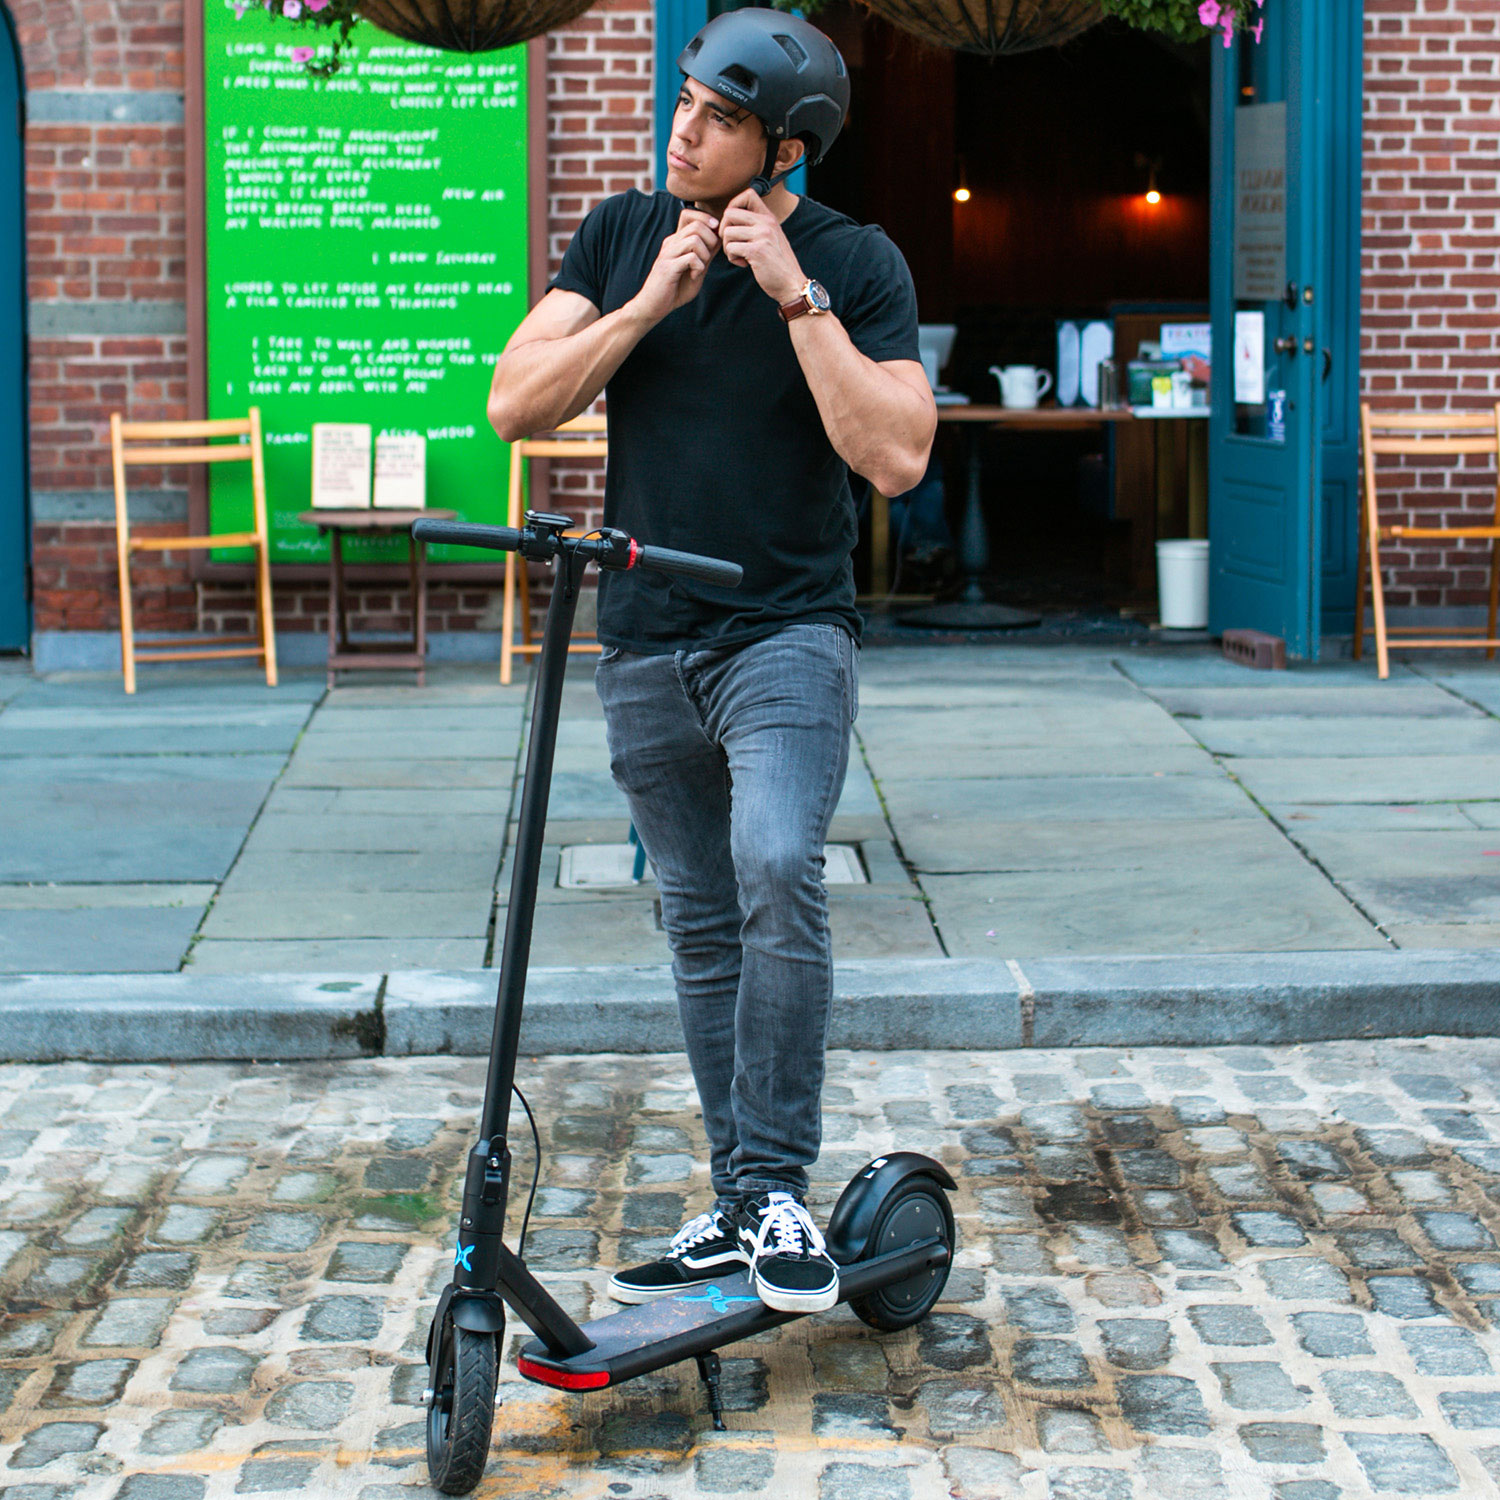 e-scooter - electric transportation